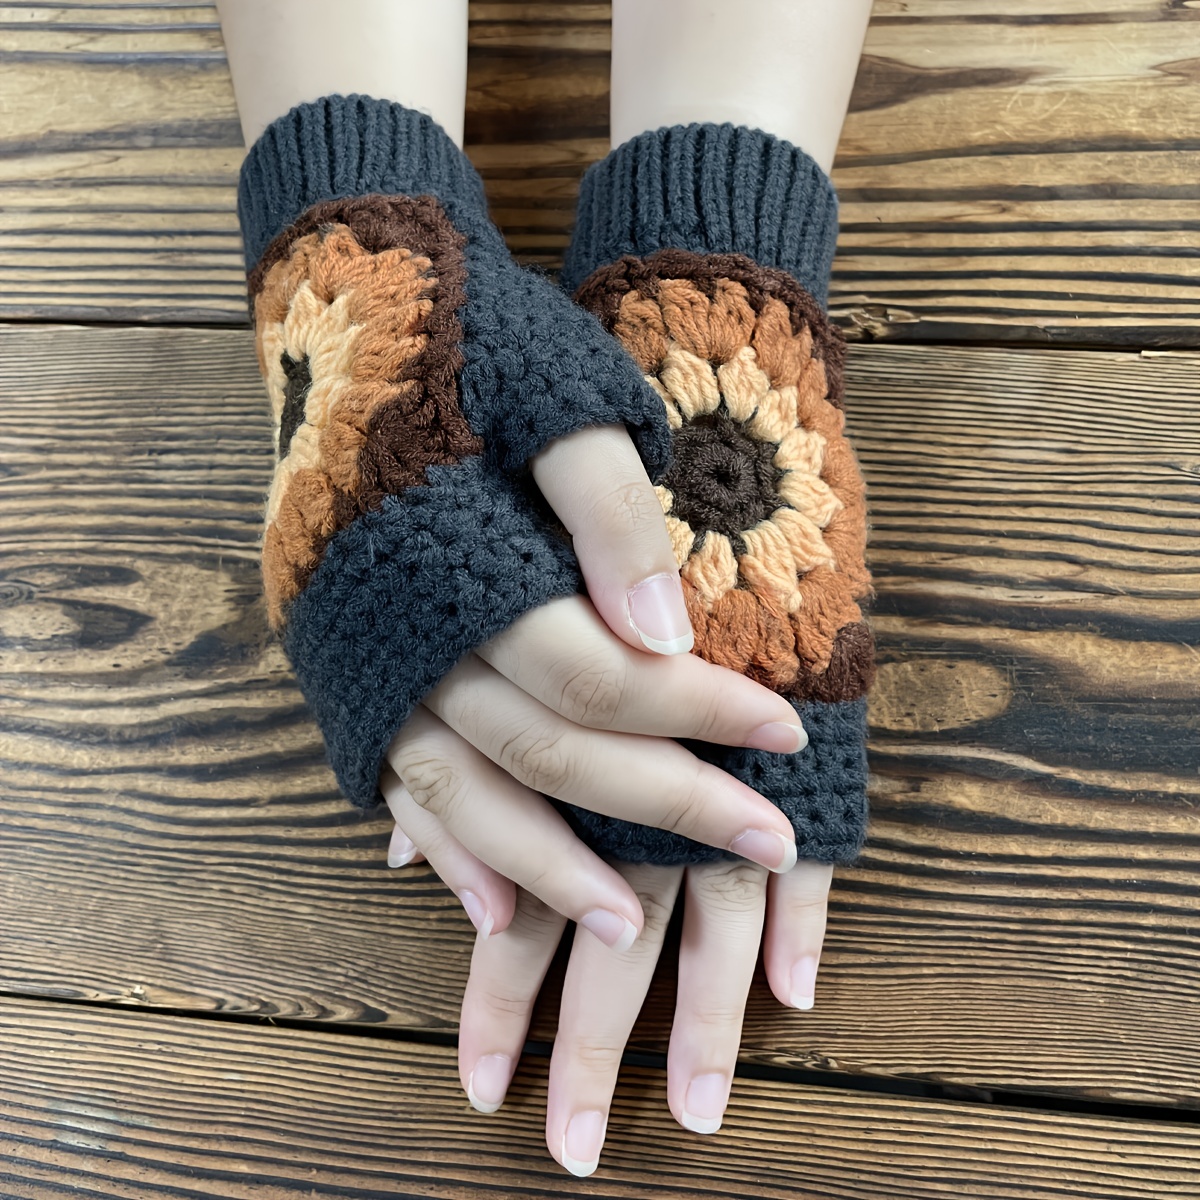 Womens Floral Embroidery Knitted Gloves Autumn Winter Crochet Gloves  Fingerless Wrist Length Mittens Gloves